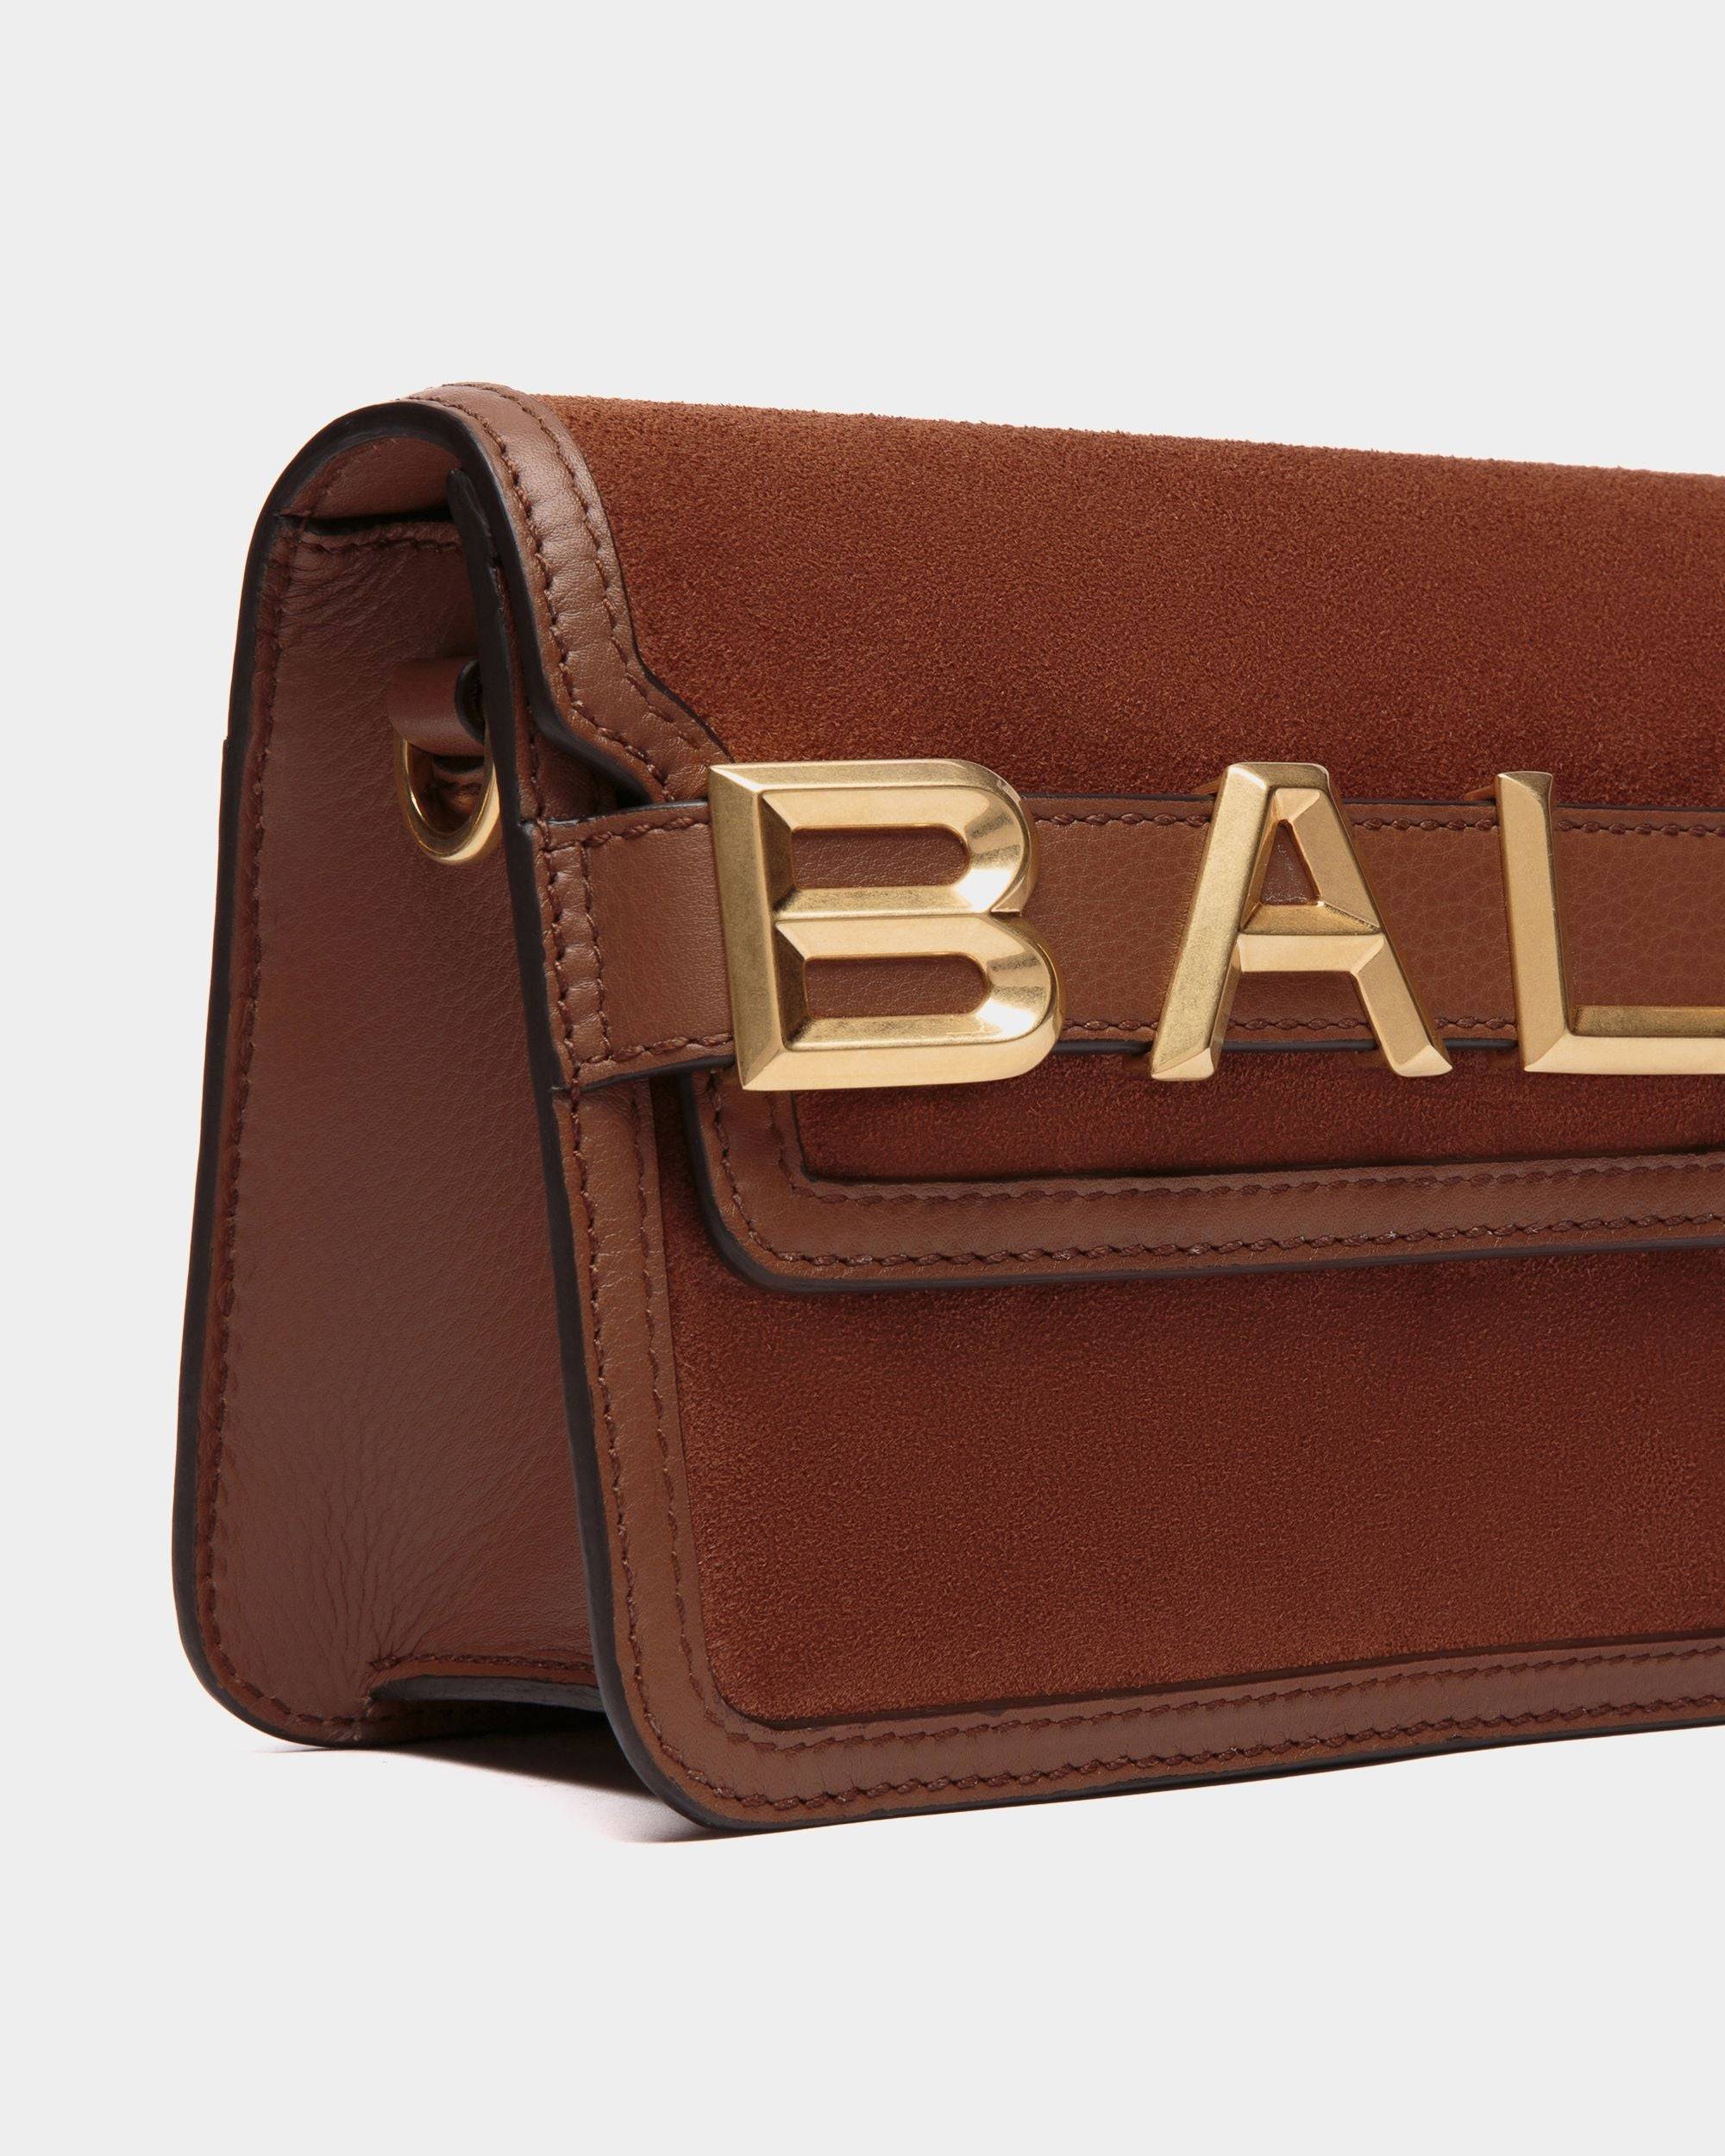 Bally Spell | Women's Crossbody Bag in Brown Suede | Bally | Still Life Detail